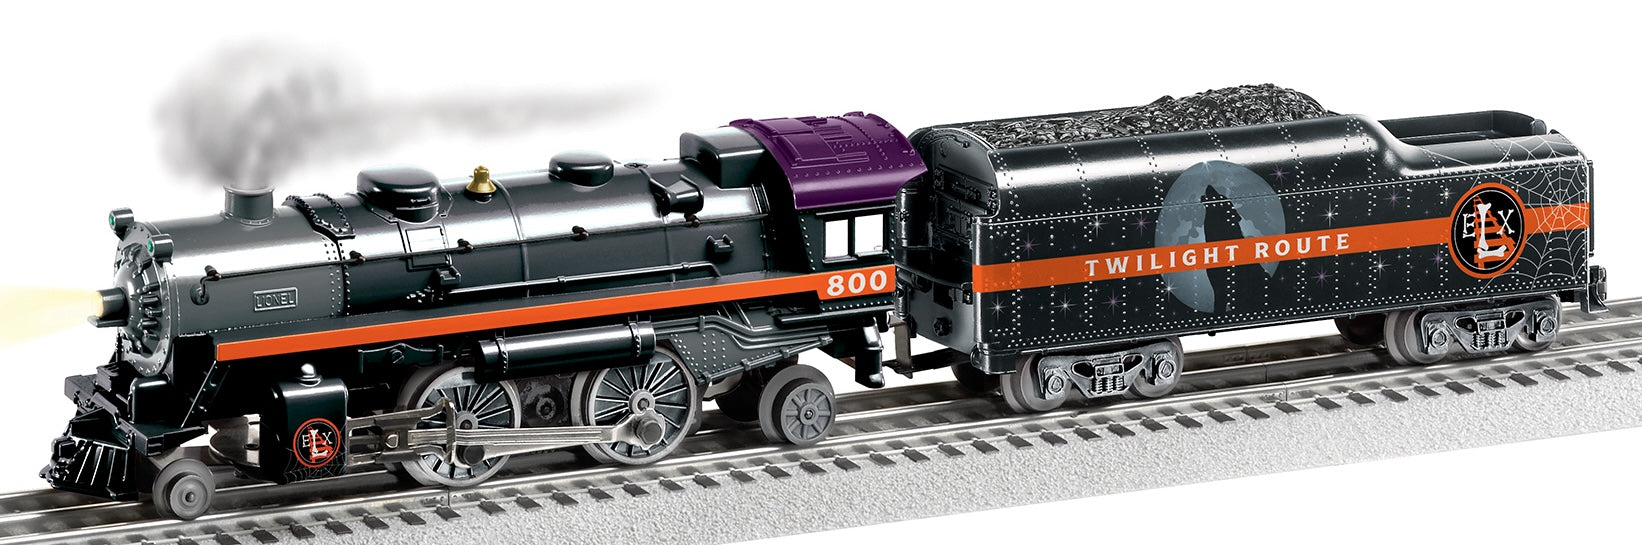 Lionel 2445020 - LionChief 2-4-2 Steam Locomotive "End of the Line Express" #800